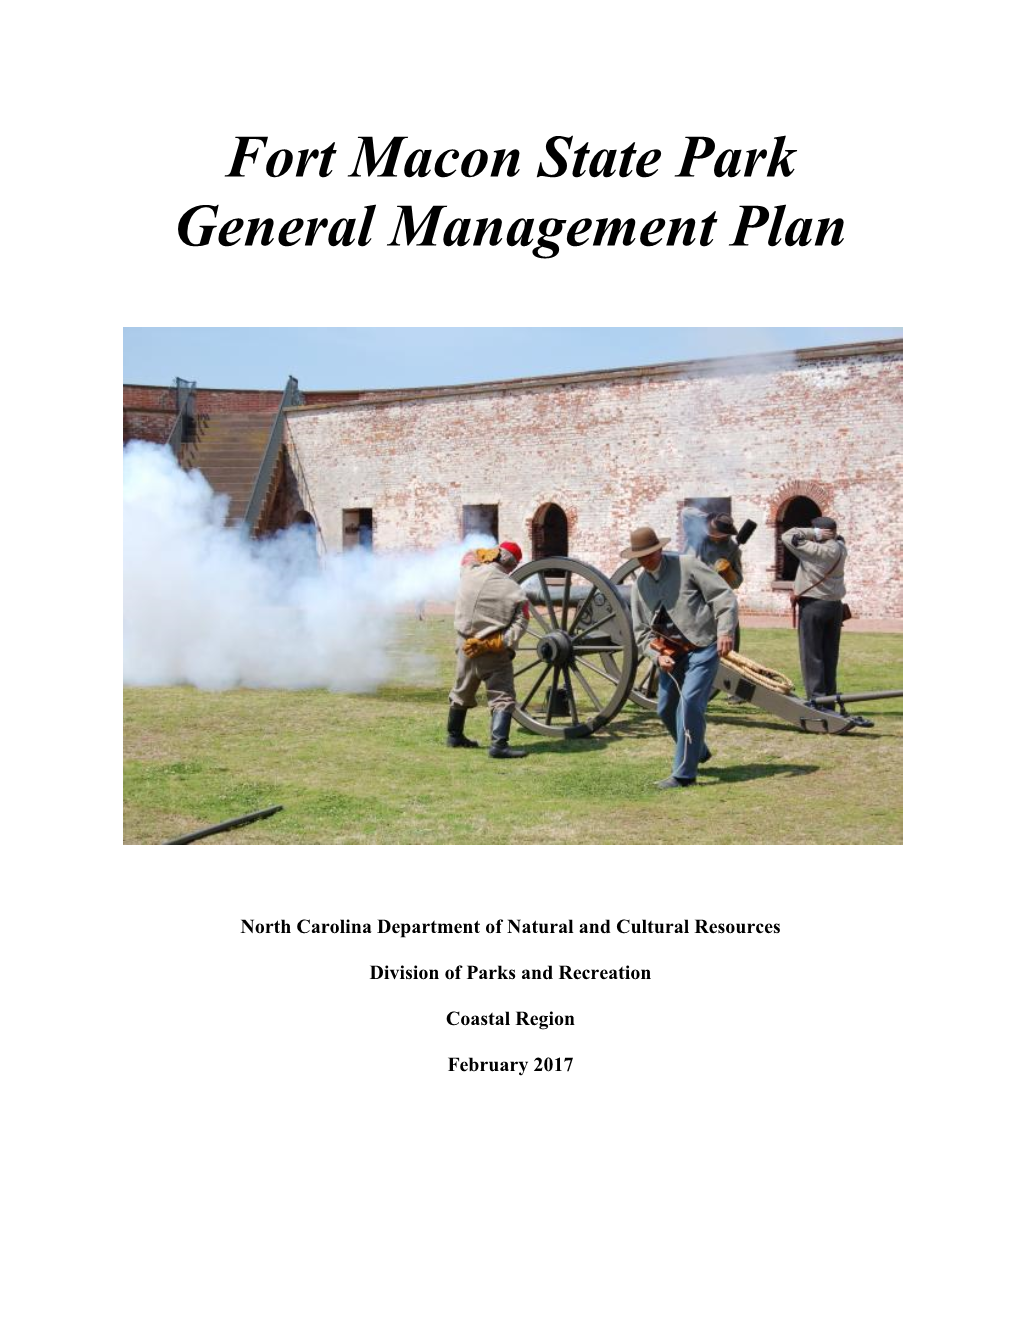 Fort Macon State Park General Management Plan